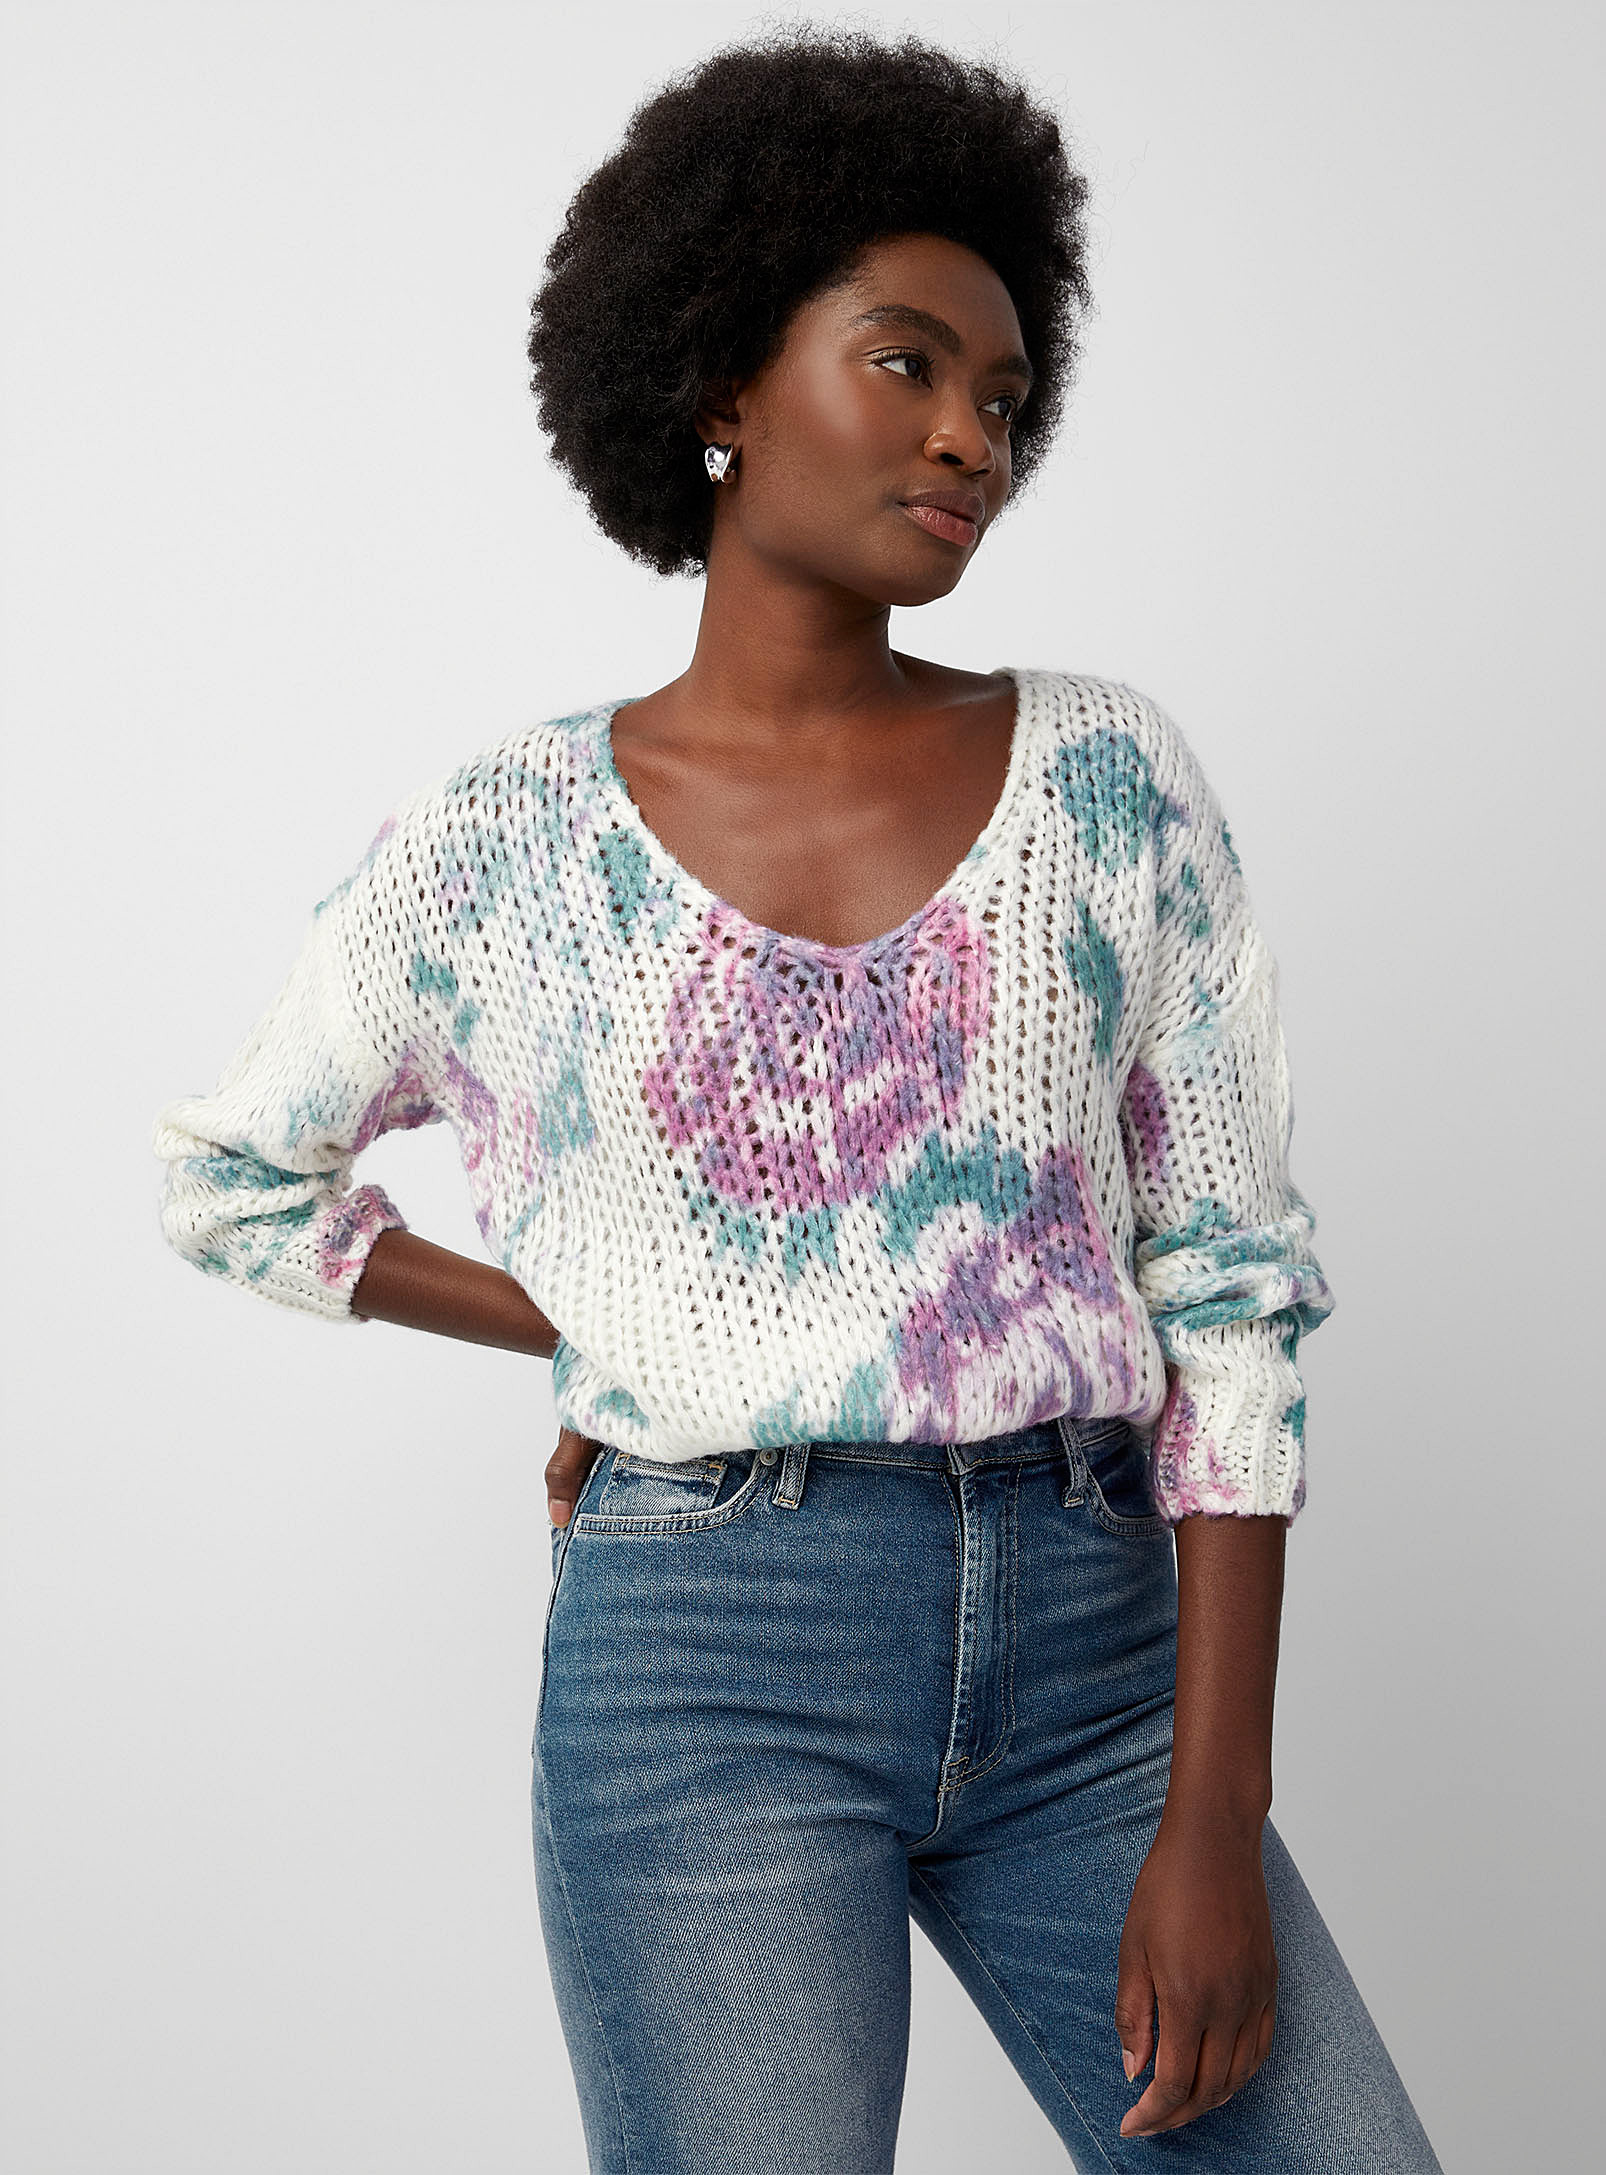 Contemporaine - Women's Floral design mohair sweater